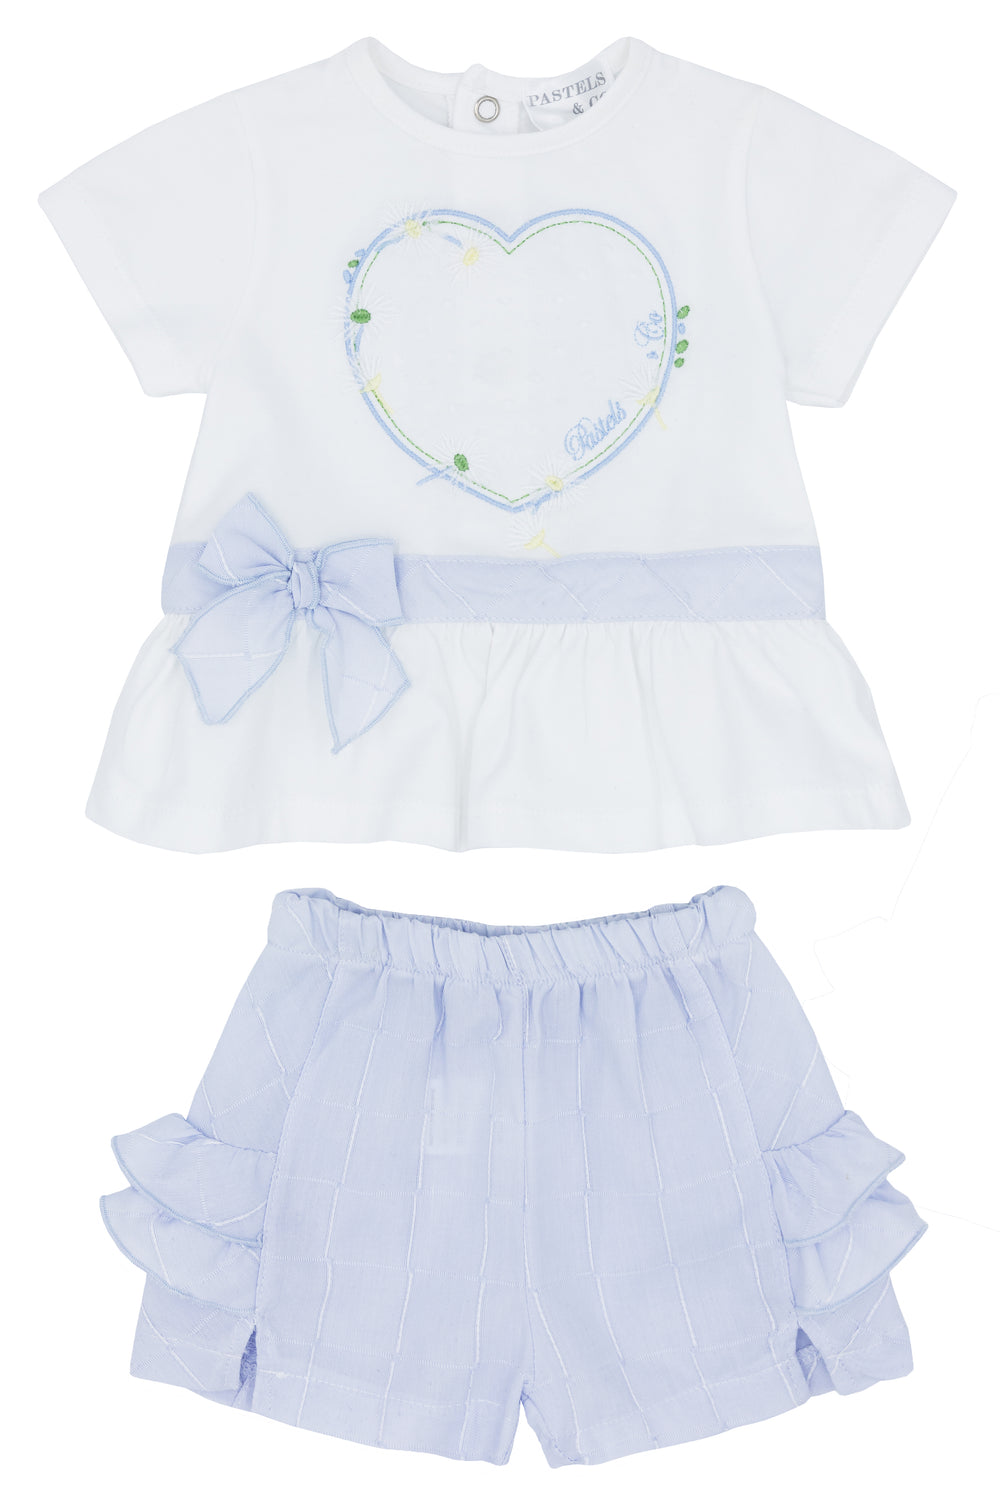 Pastels & Co "Caroline" White & Blue Blouse & Shorts | Millie and John